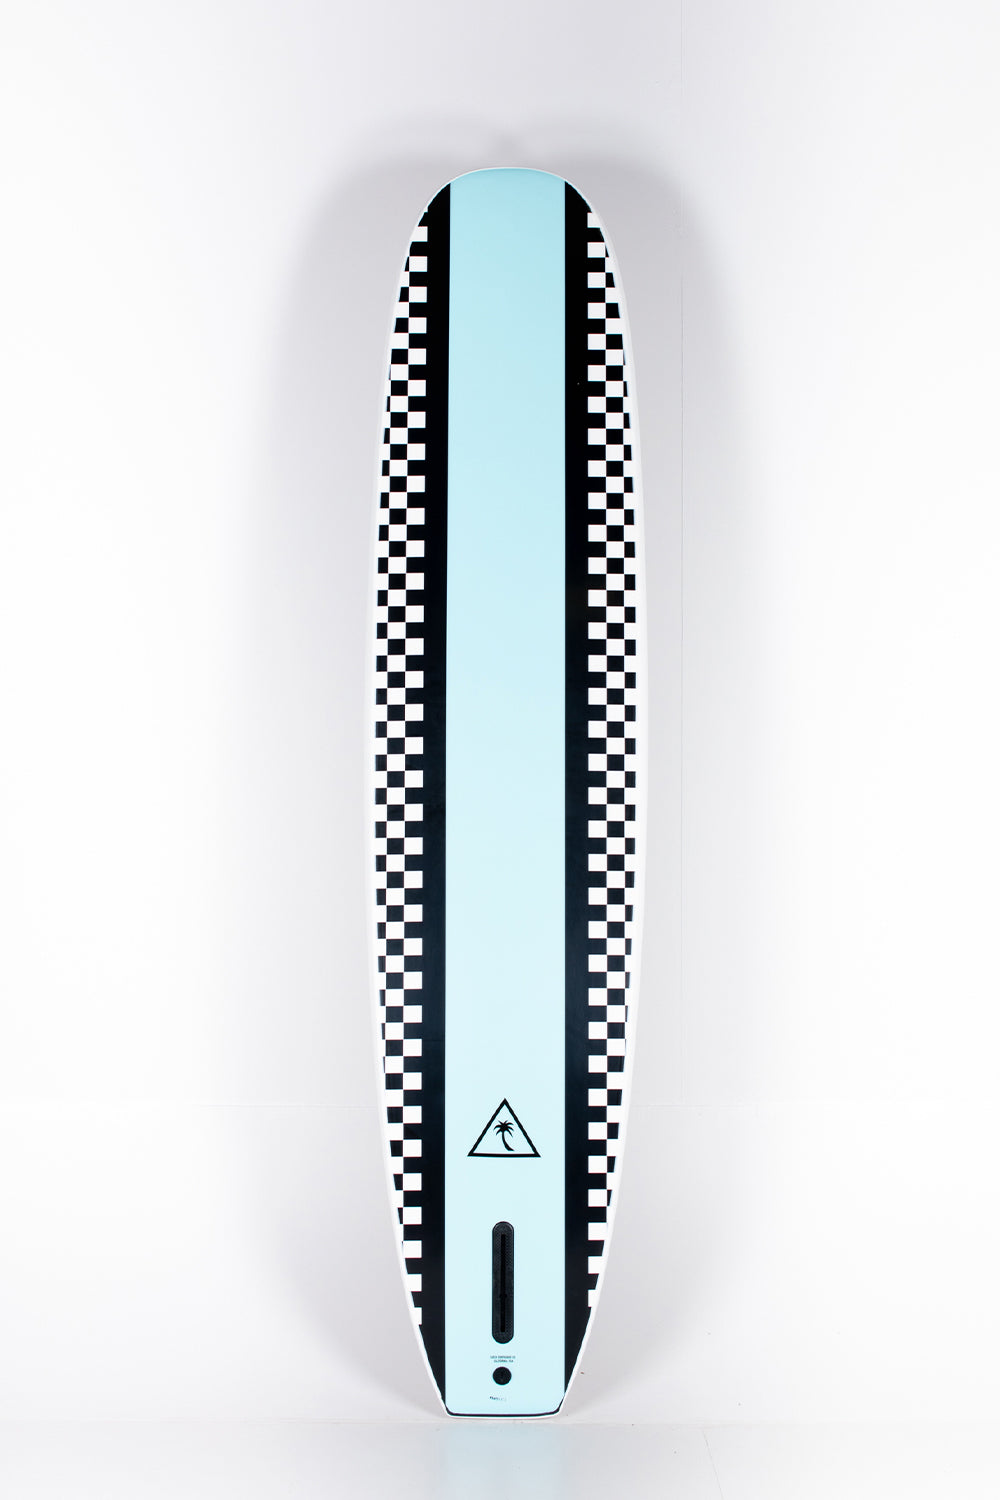 Pukas Surf Shop - Catch Surf - NOSERIDER SINGLE FIN White Light Blue - 8'6" x 22,90" x 3,15" x 80l.